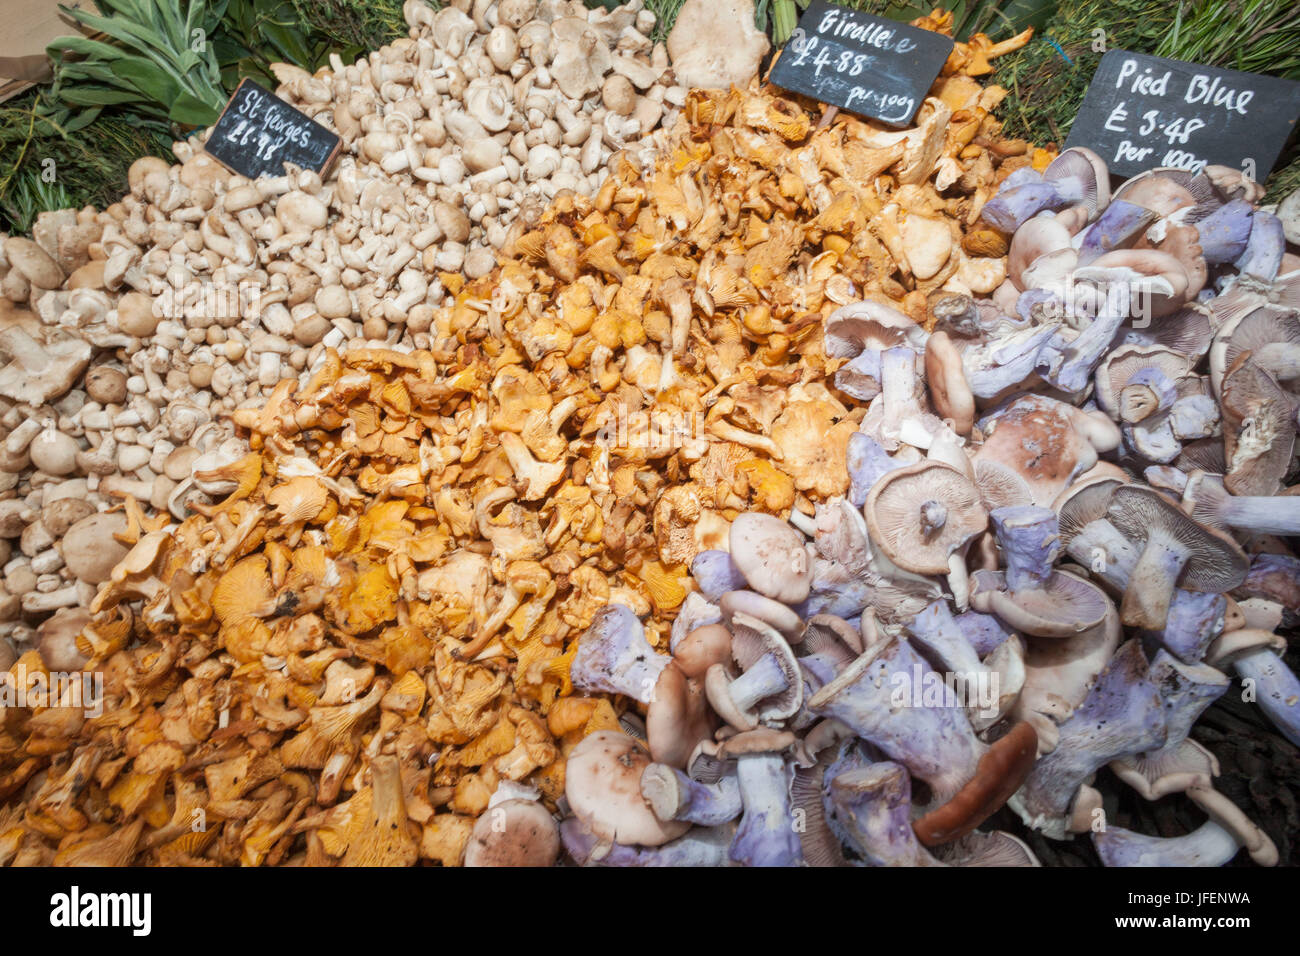 England, London, Southwark, Borough Market, Display of Wild Mushrooms Stock Photo